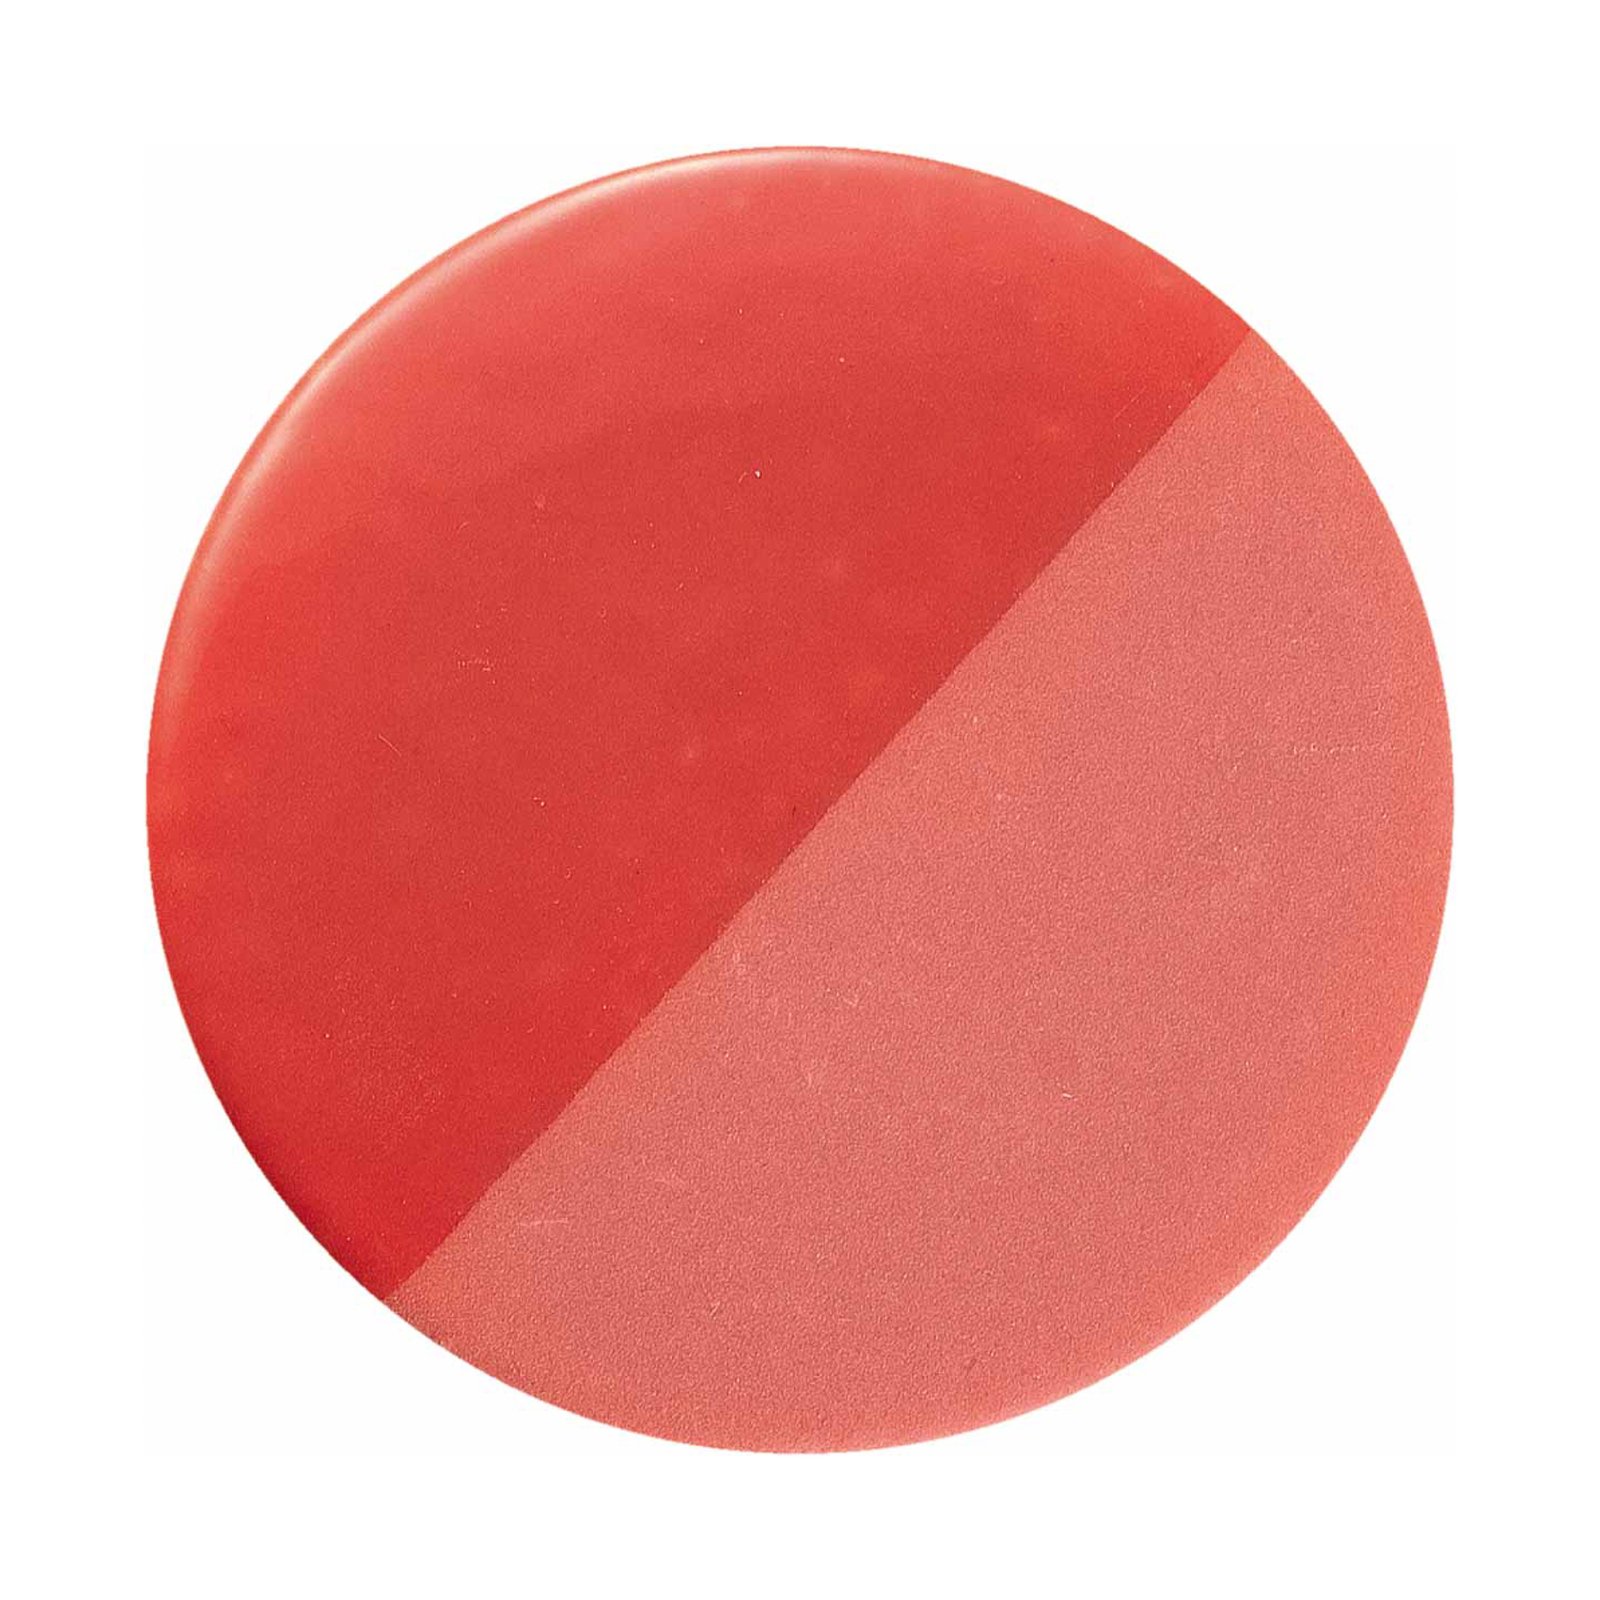 Hängeleuchte PI, zylinderförmig, Ø 8 cm, rot